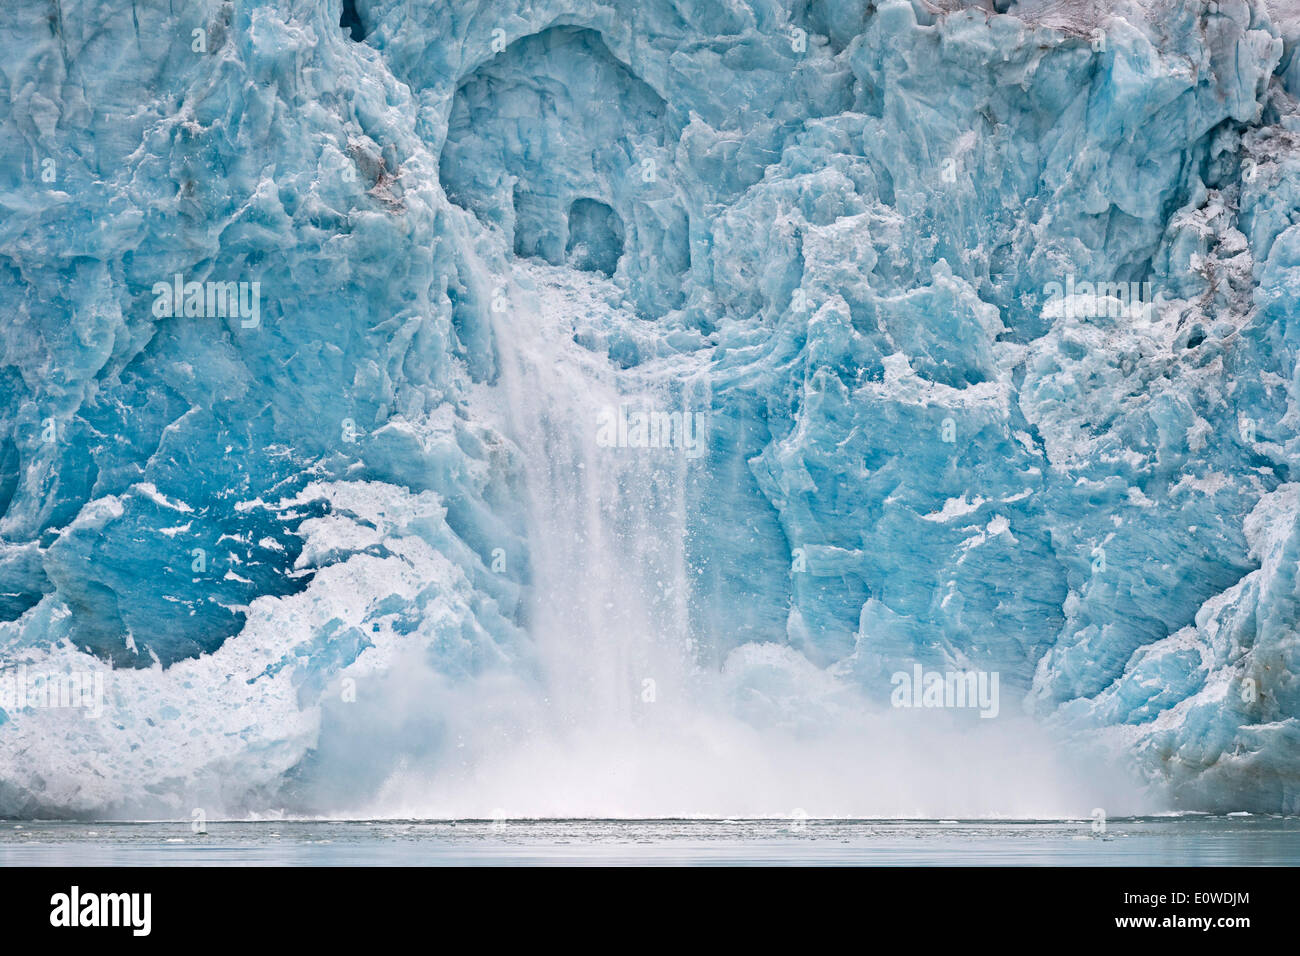 Il ghiacciaio del parto, rim del ghiacciaio Monacobreen, Liefdefjorden, Spitsbergen, isole Svalbard Isole Svalbard e Jan Mayen, Norvegia Foto Stock